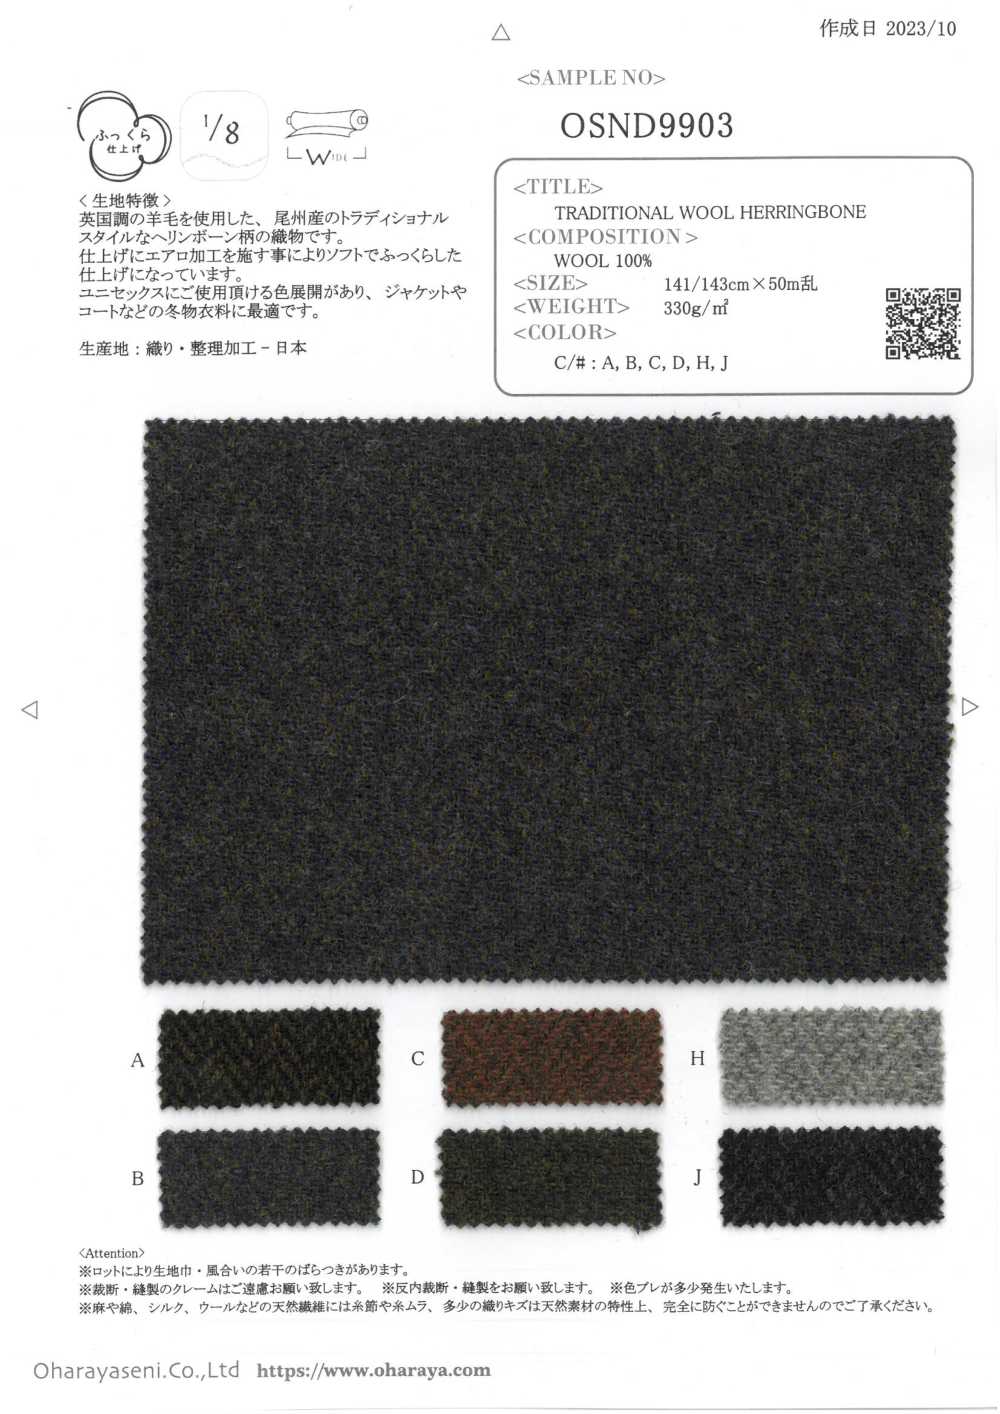 OSND9903 CHEVRON TRADITIONNEL EN LAINE[Fabrication De Textile] Oharayaseni